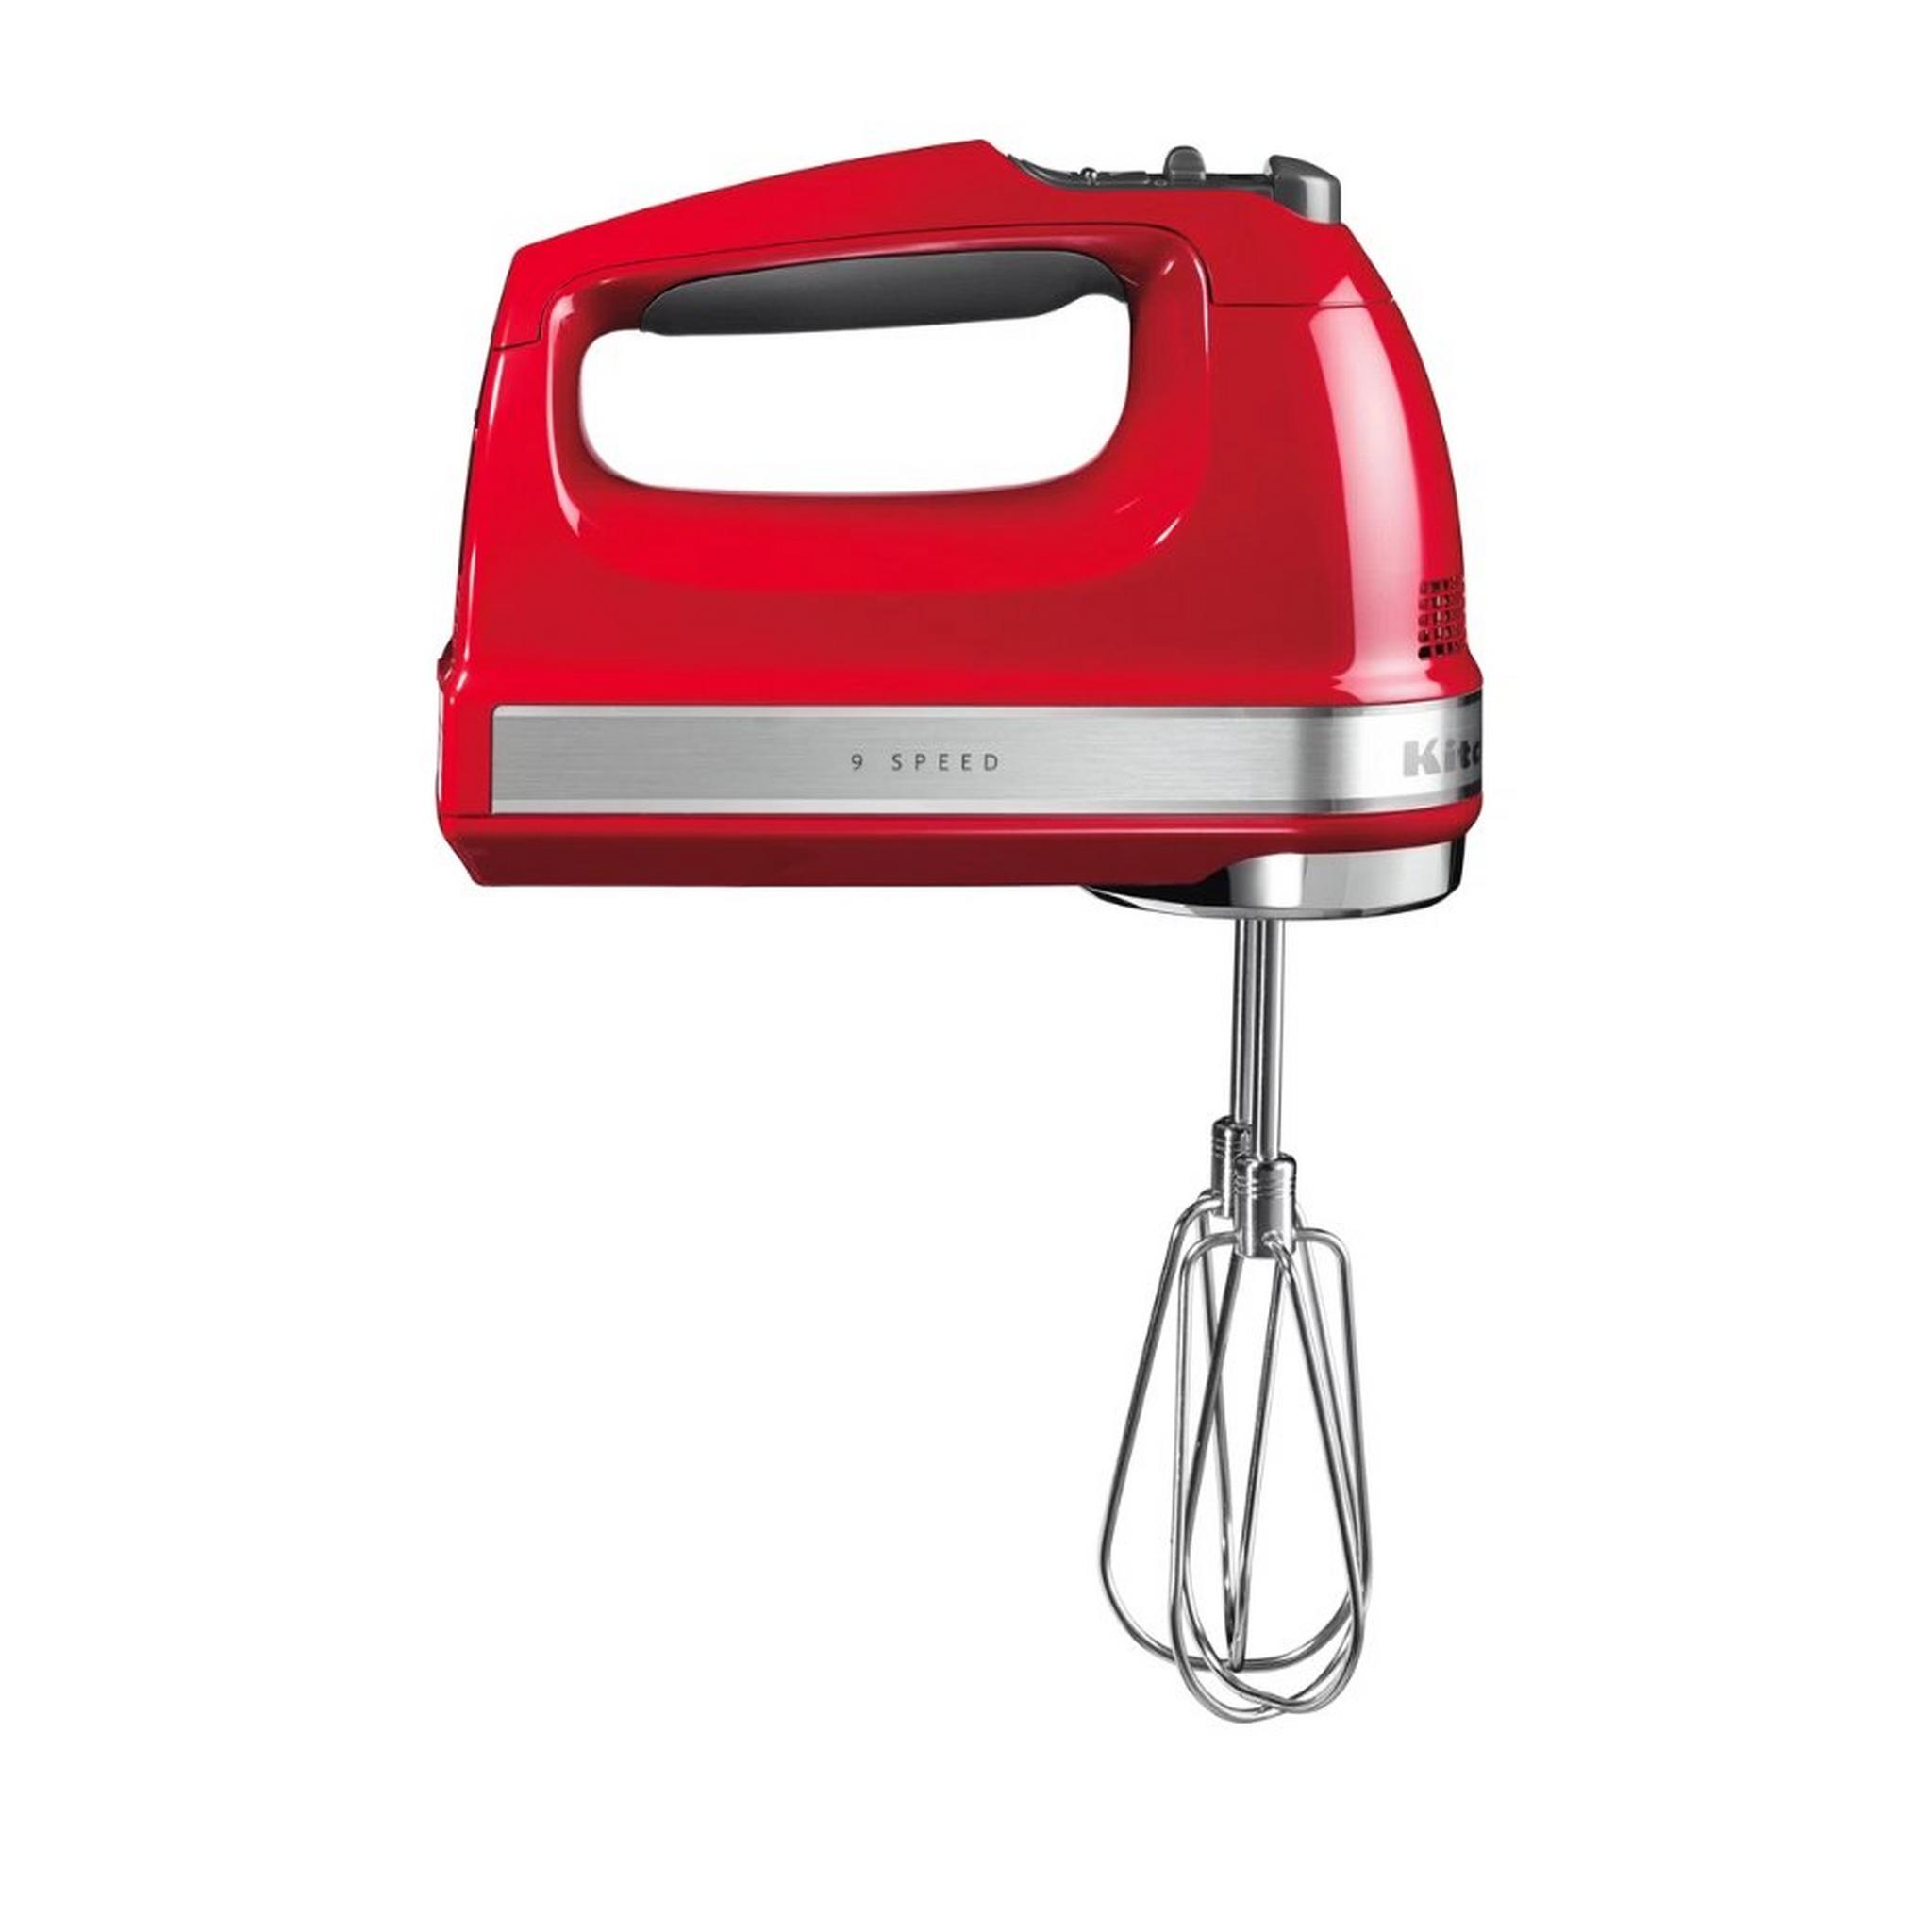 KitchenAid Hand Mixer, 9 Speed, 5KHM9212BER - Red